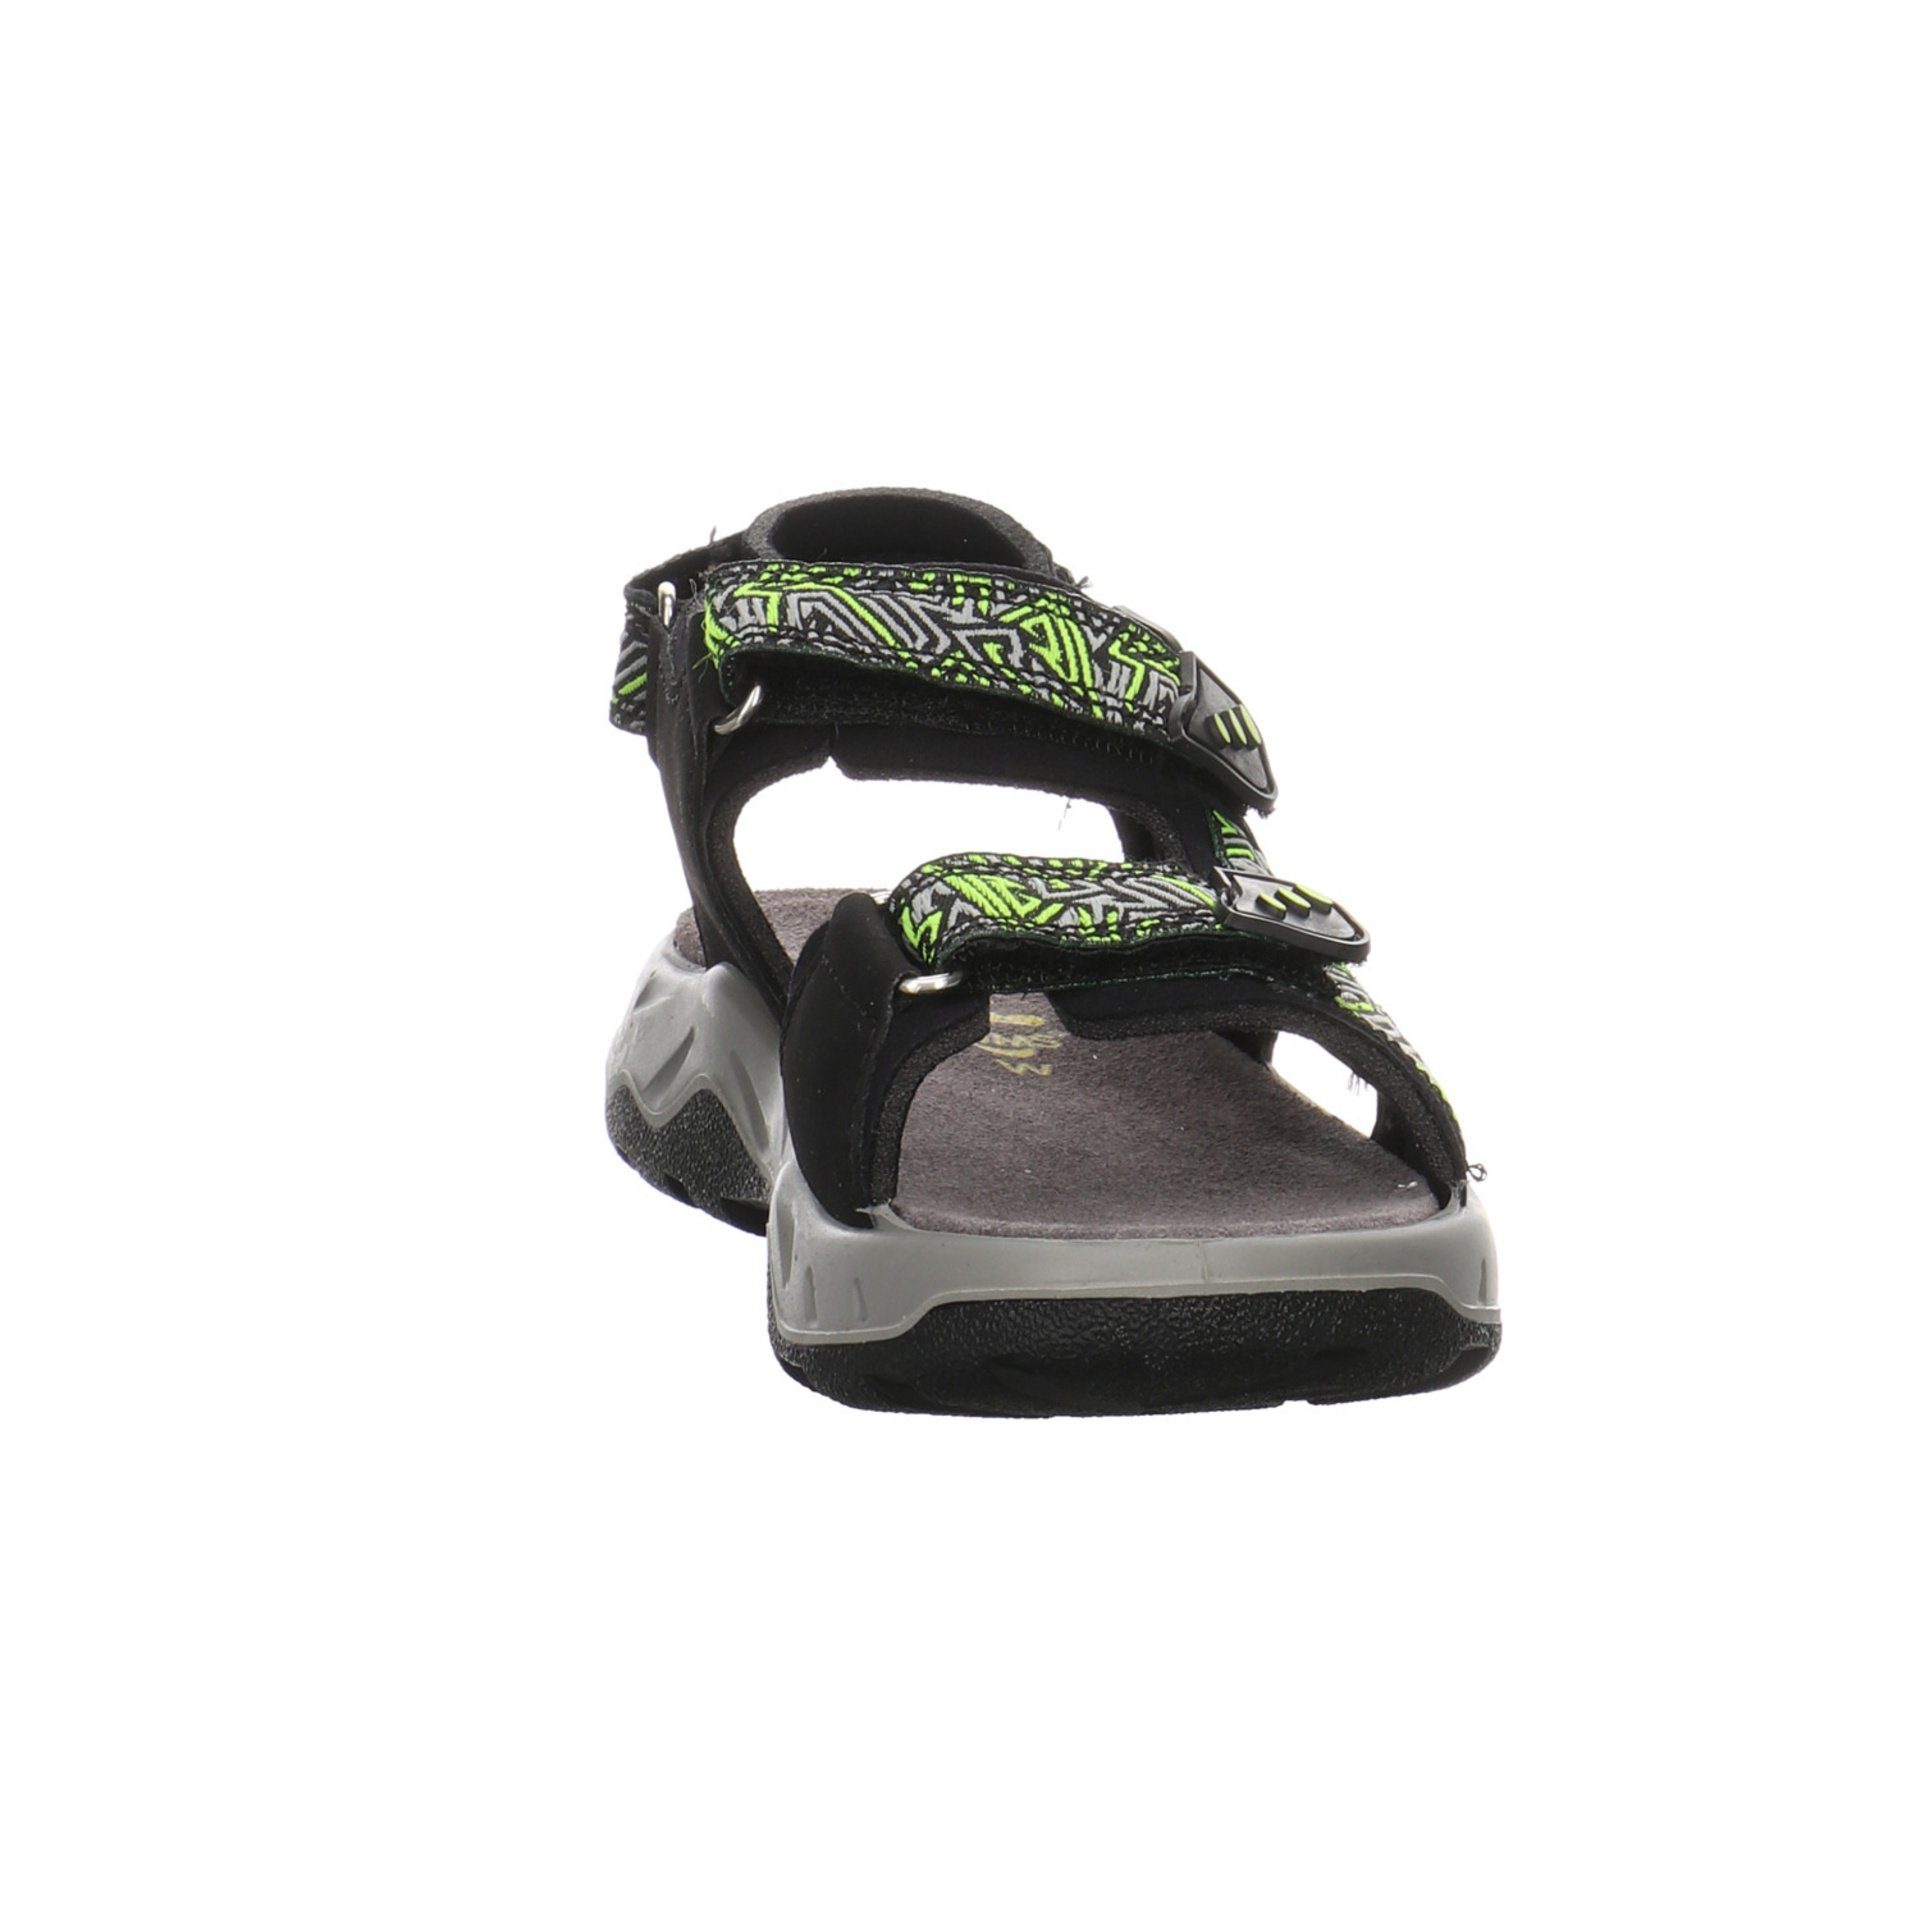 Salamander Lurchi Kinderschuhe Schuhe Sandale Odono Sandale Synthetikkombination Multi Sandalen Black Jungen